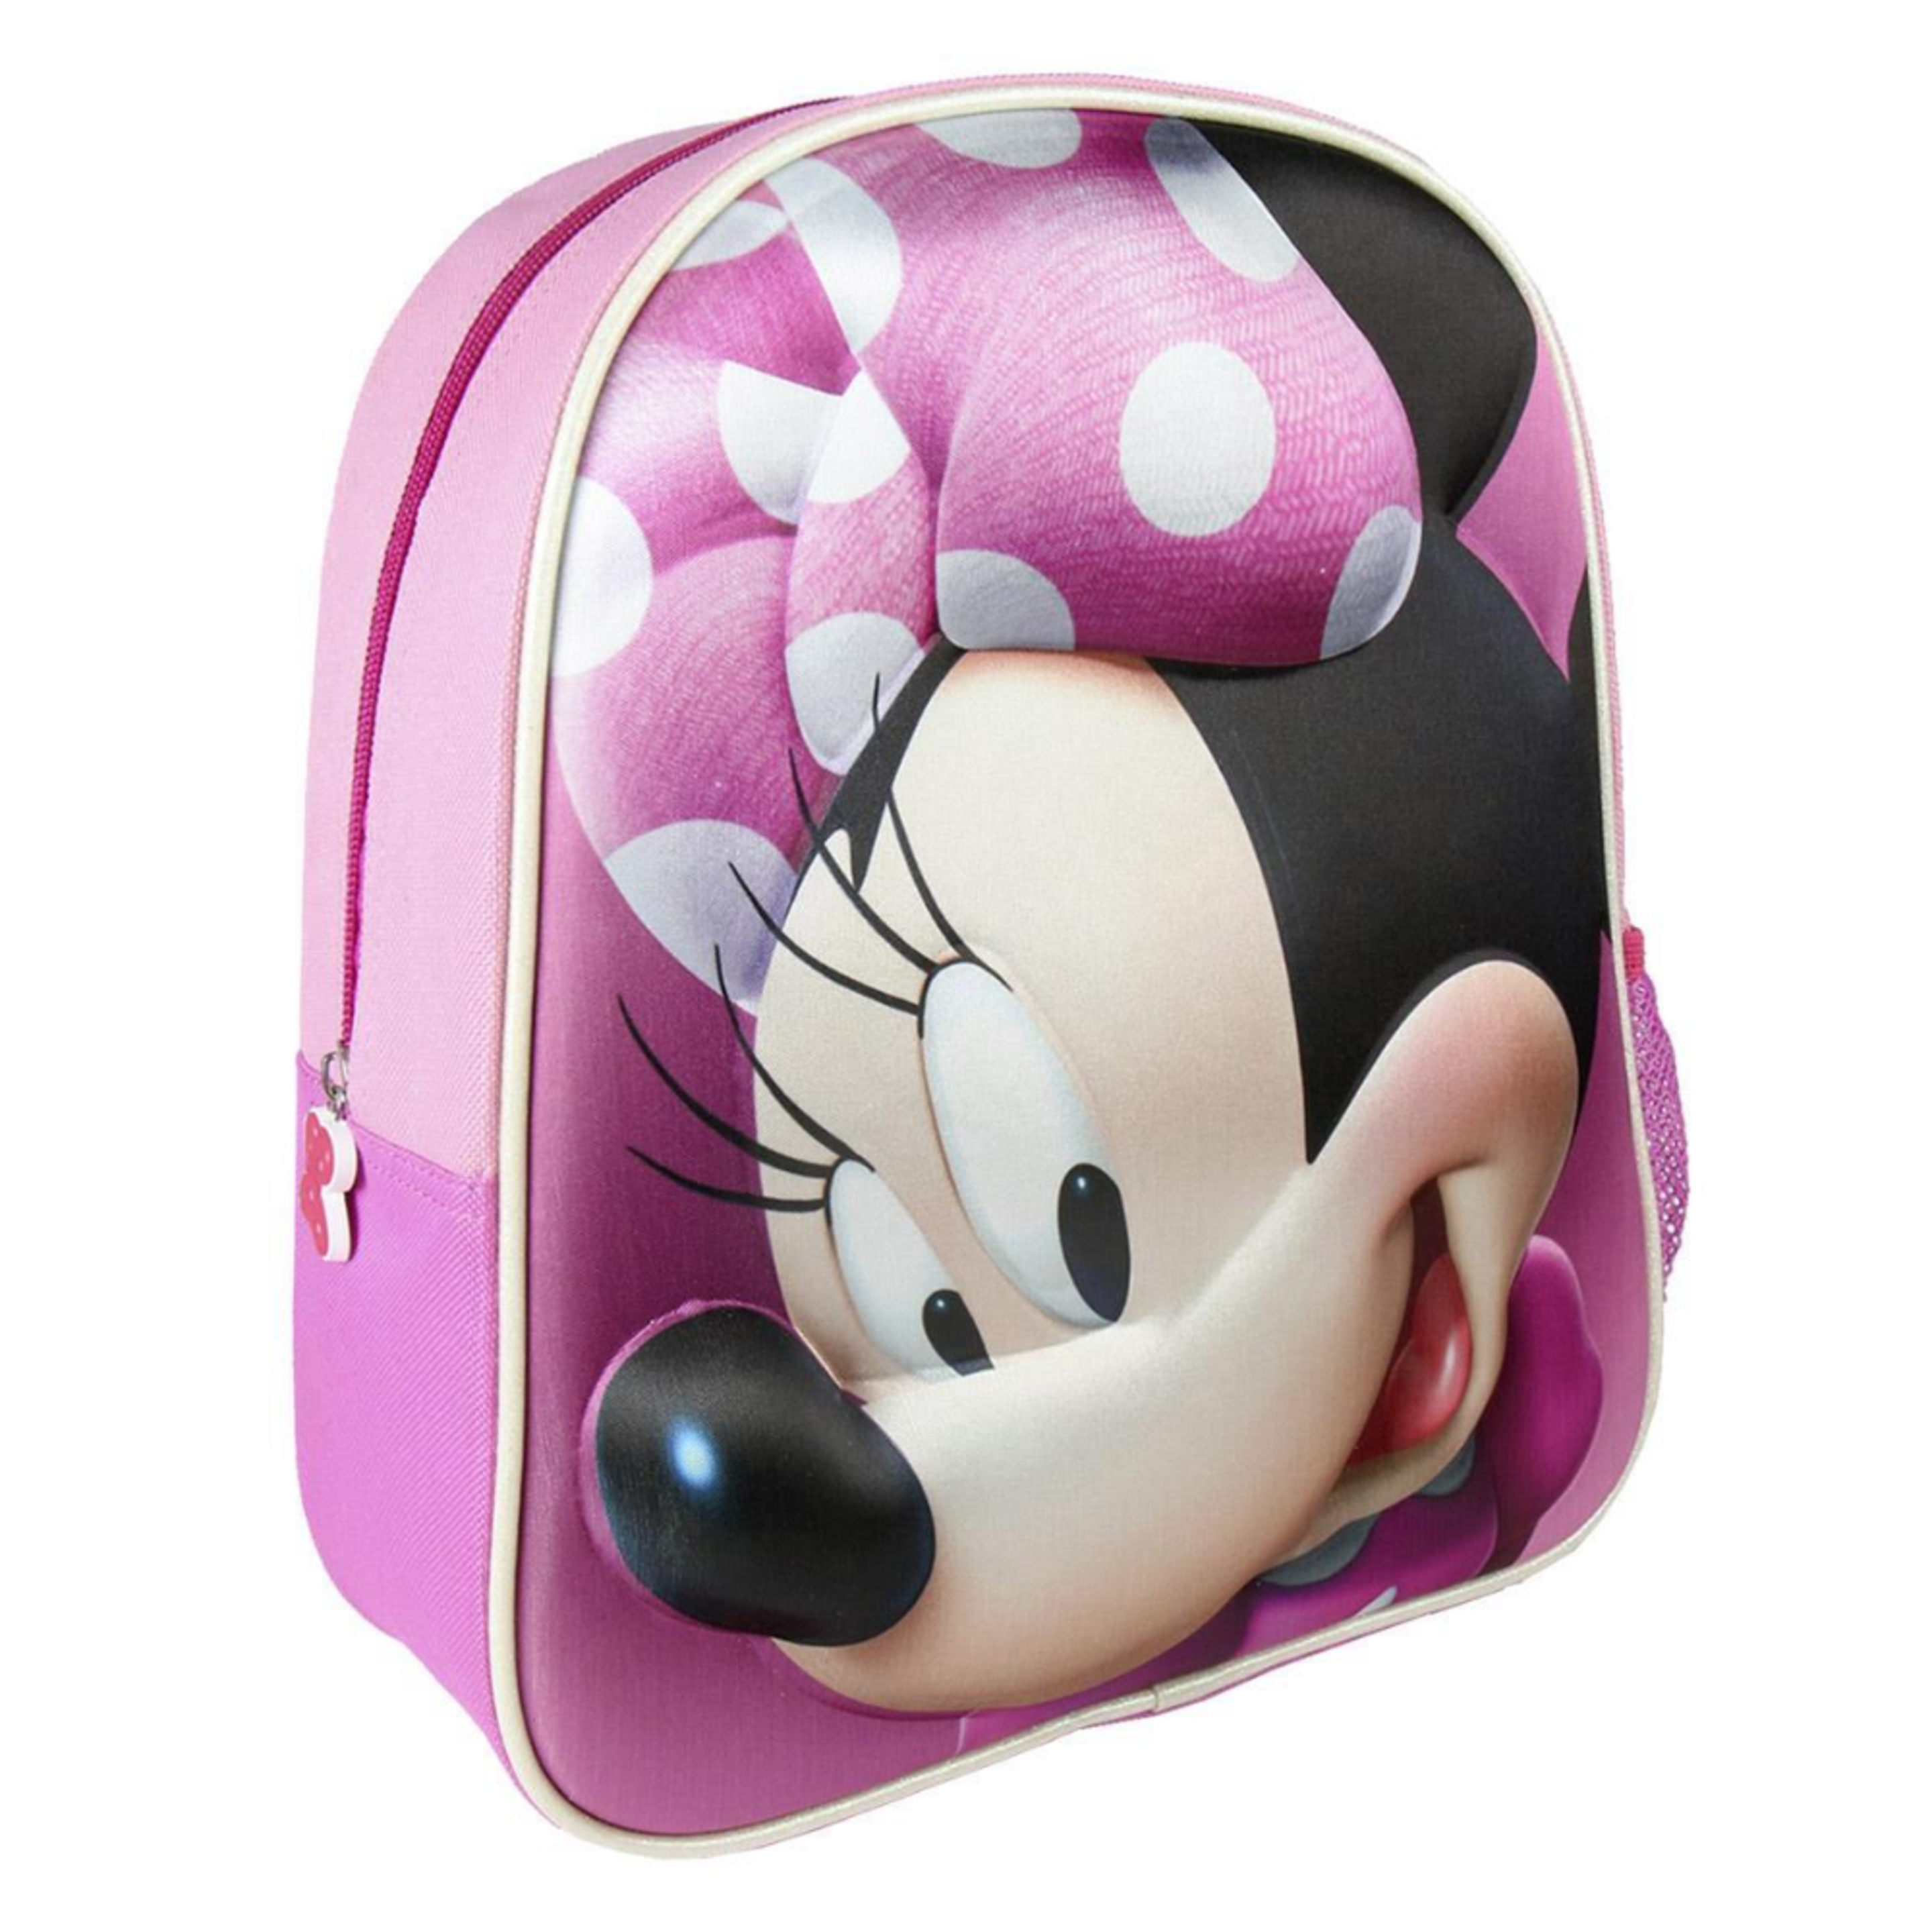 Mochila Minnie Mouse 63013 - rosa - 